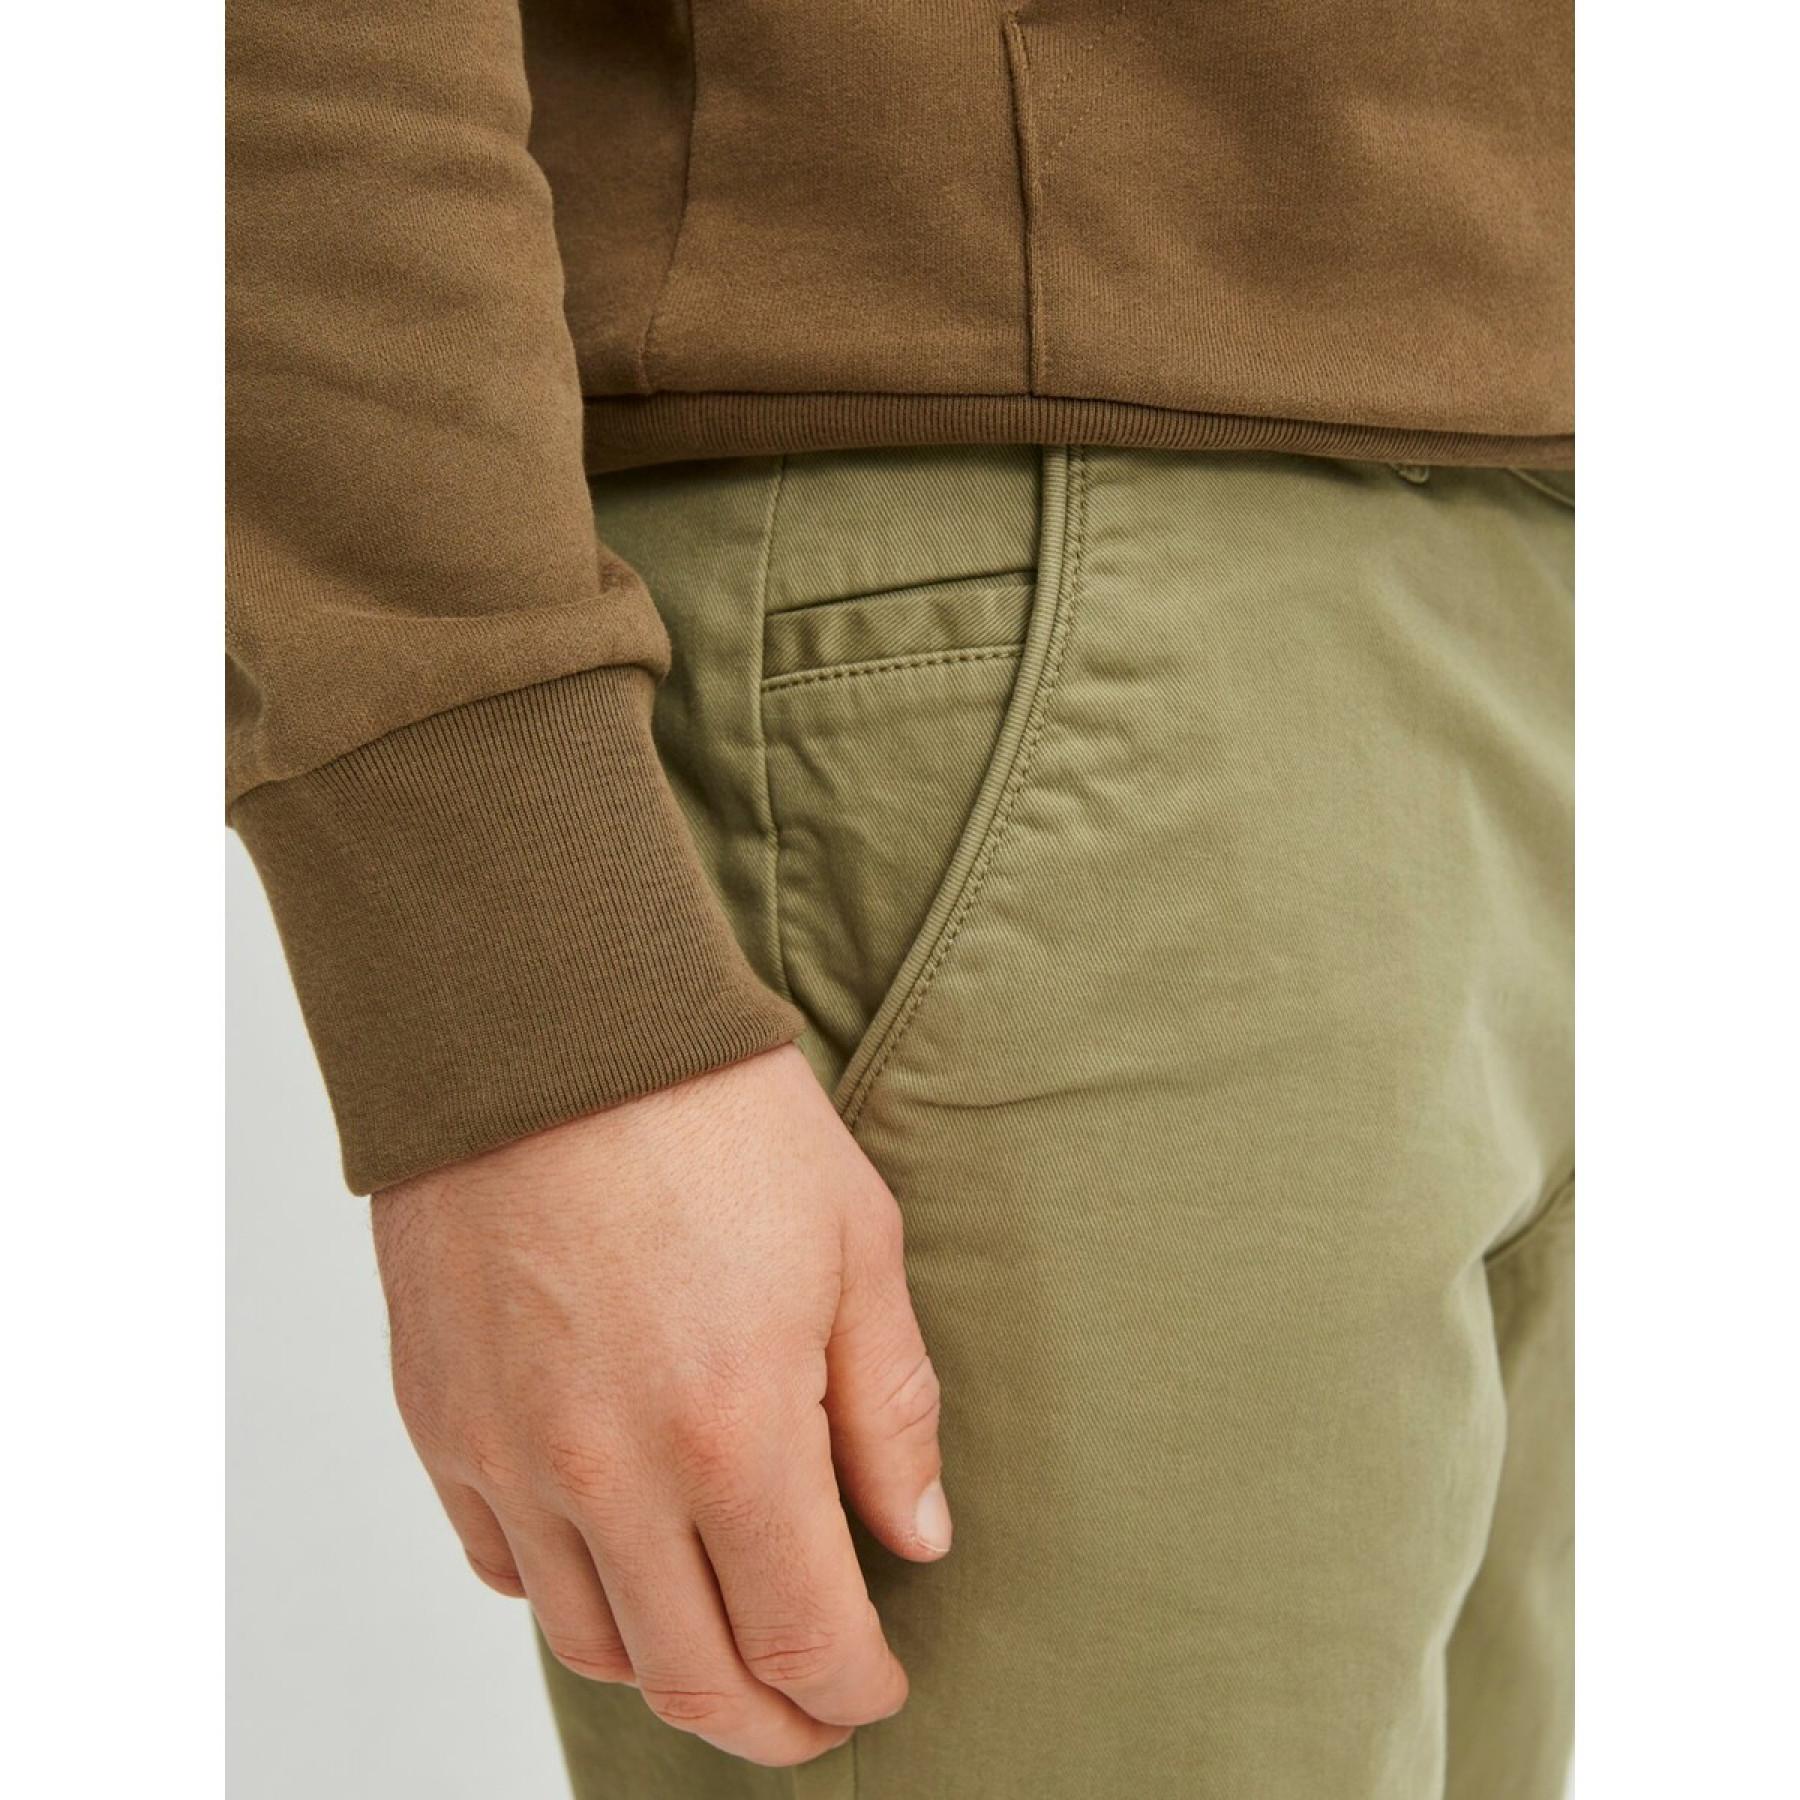 Pantalon Selected Newparis flex straight